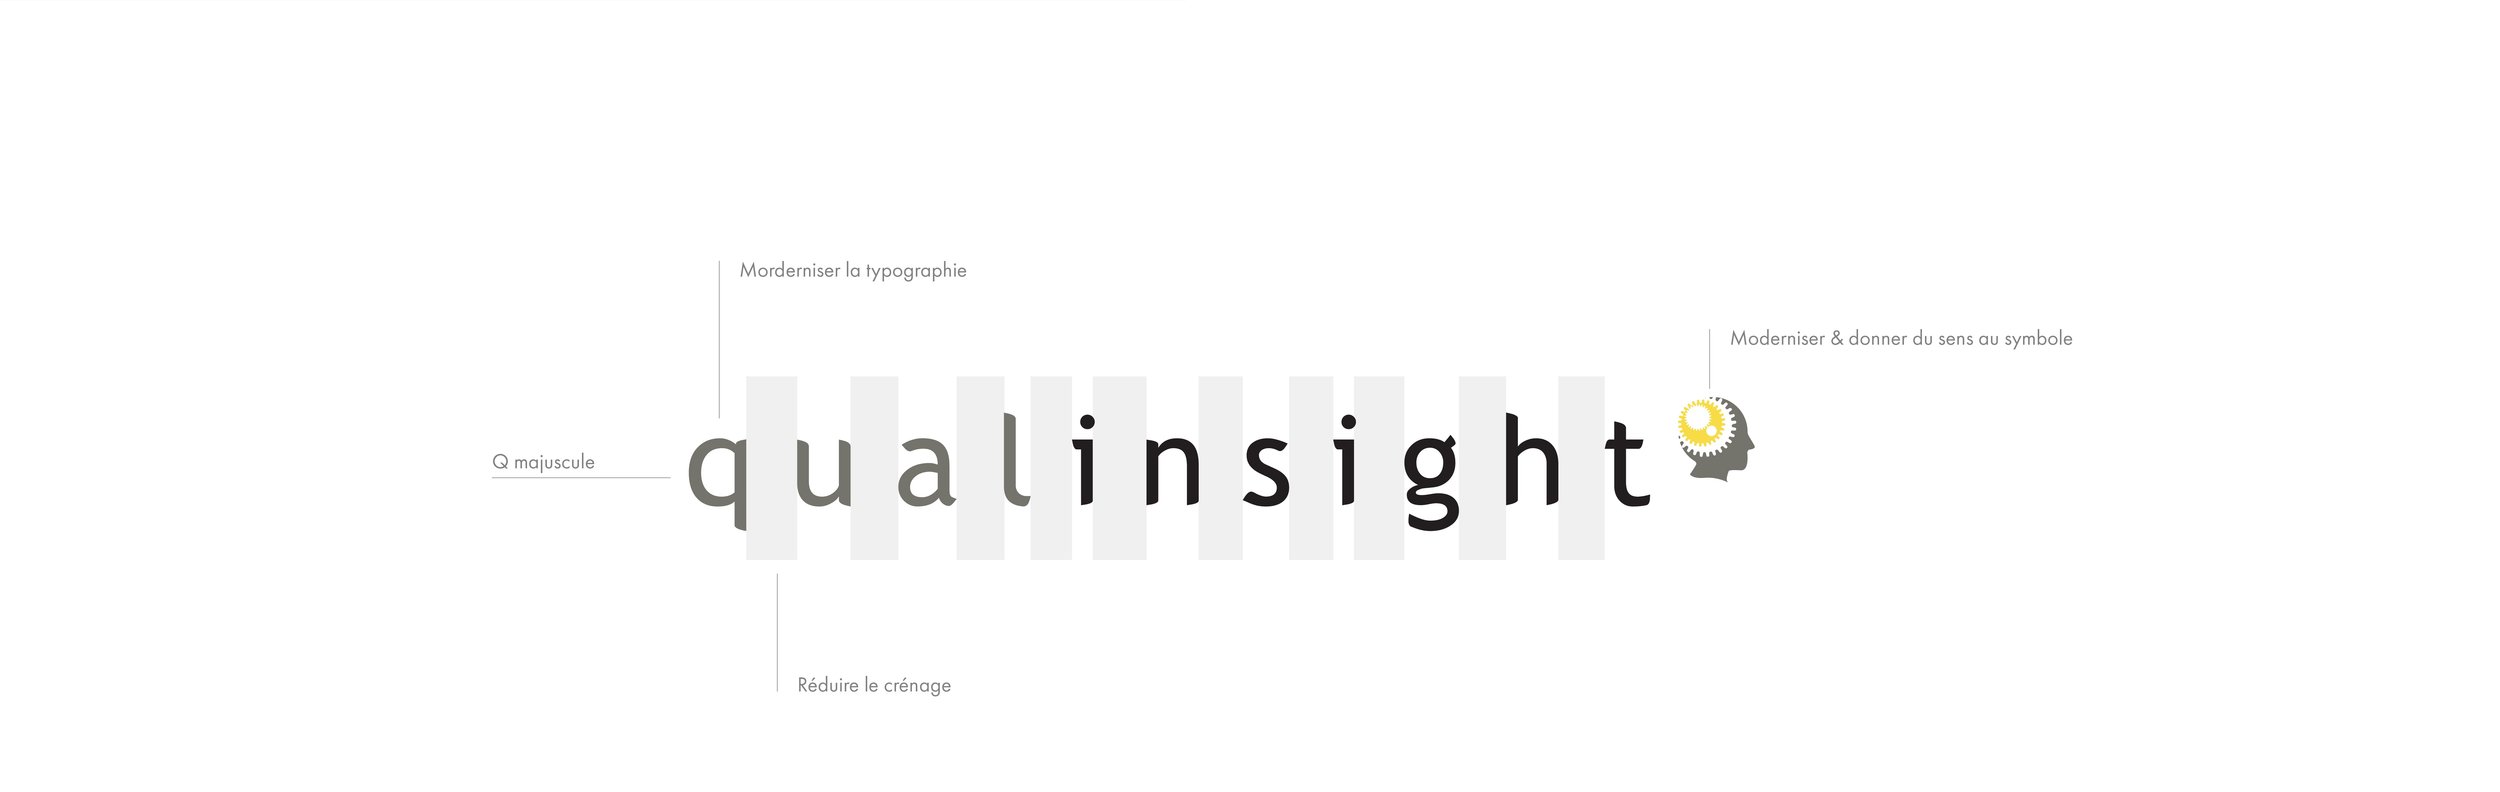 2_qualinsight__analyse_ancien_logo.jpg